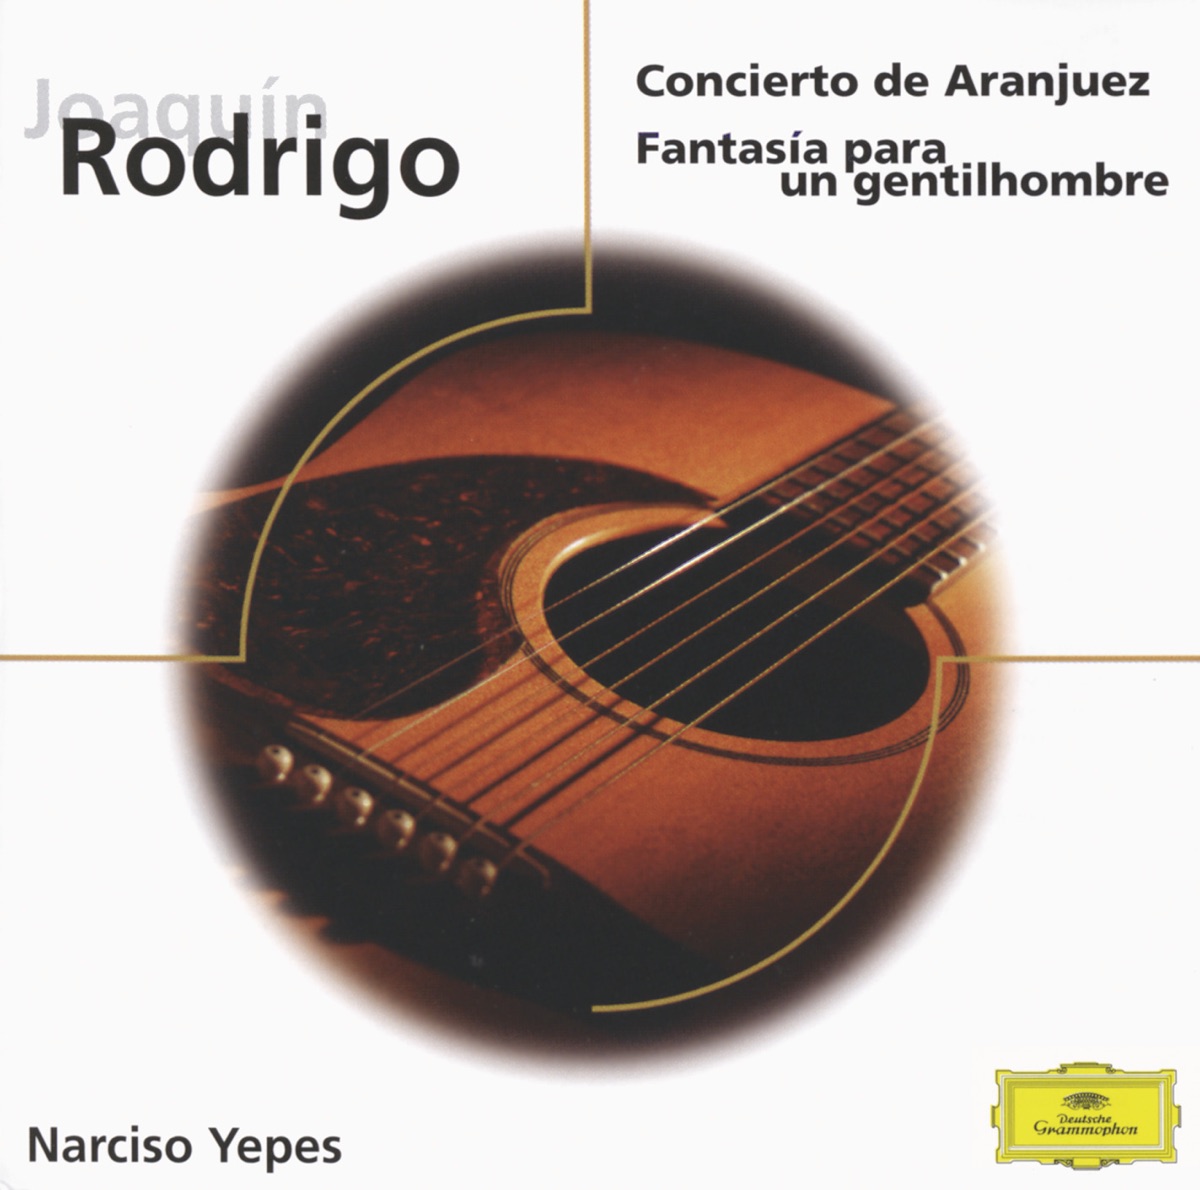 Concierto de Aranjuez by Narciso Yepes, Odon Alonso & Spanish R.T.V.  Symphony Orchestra on Apple Music